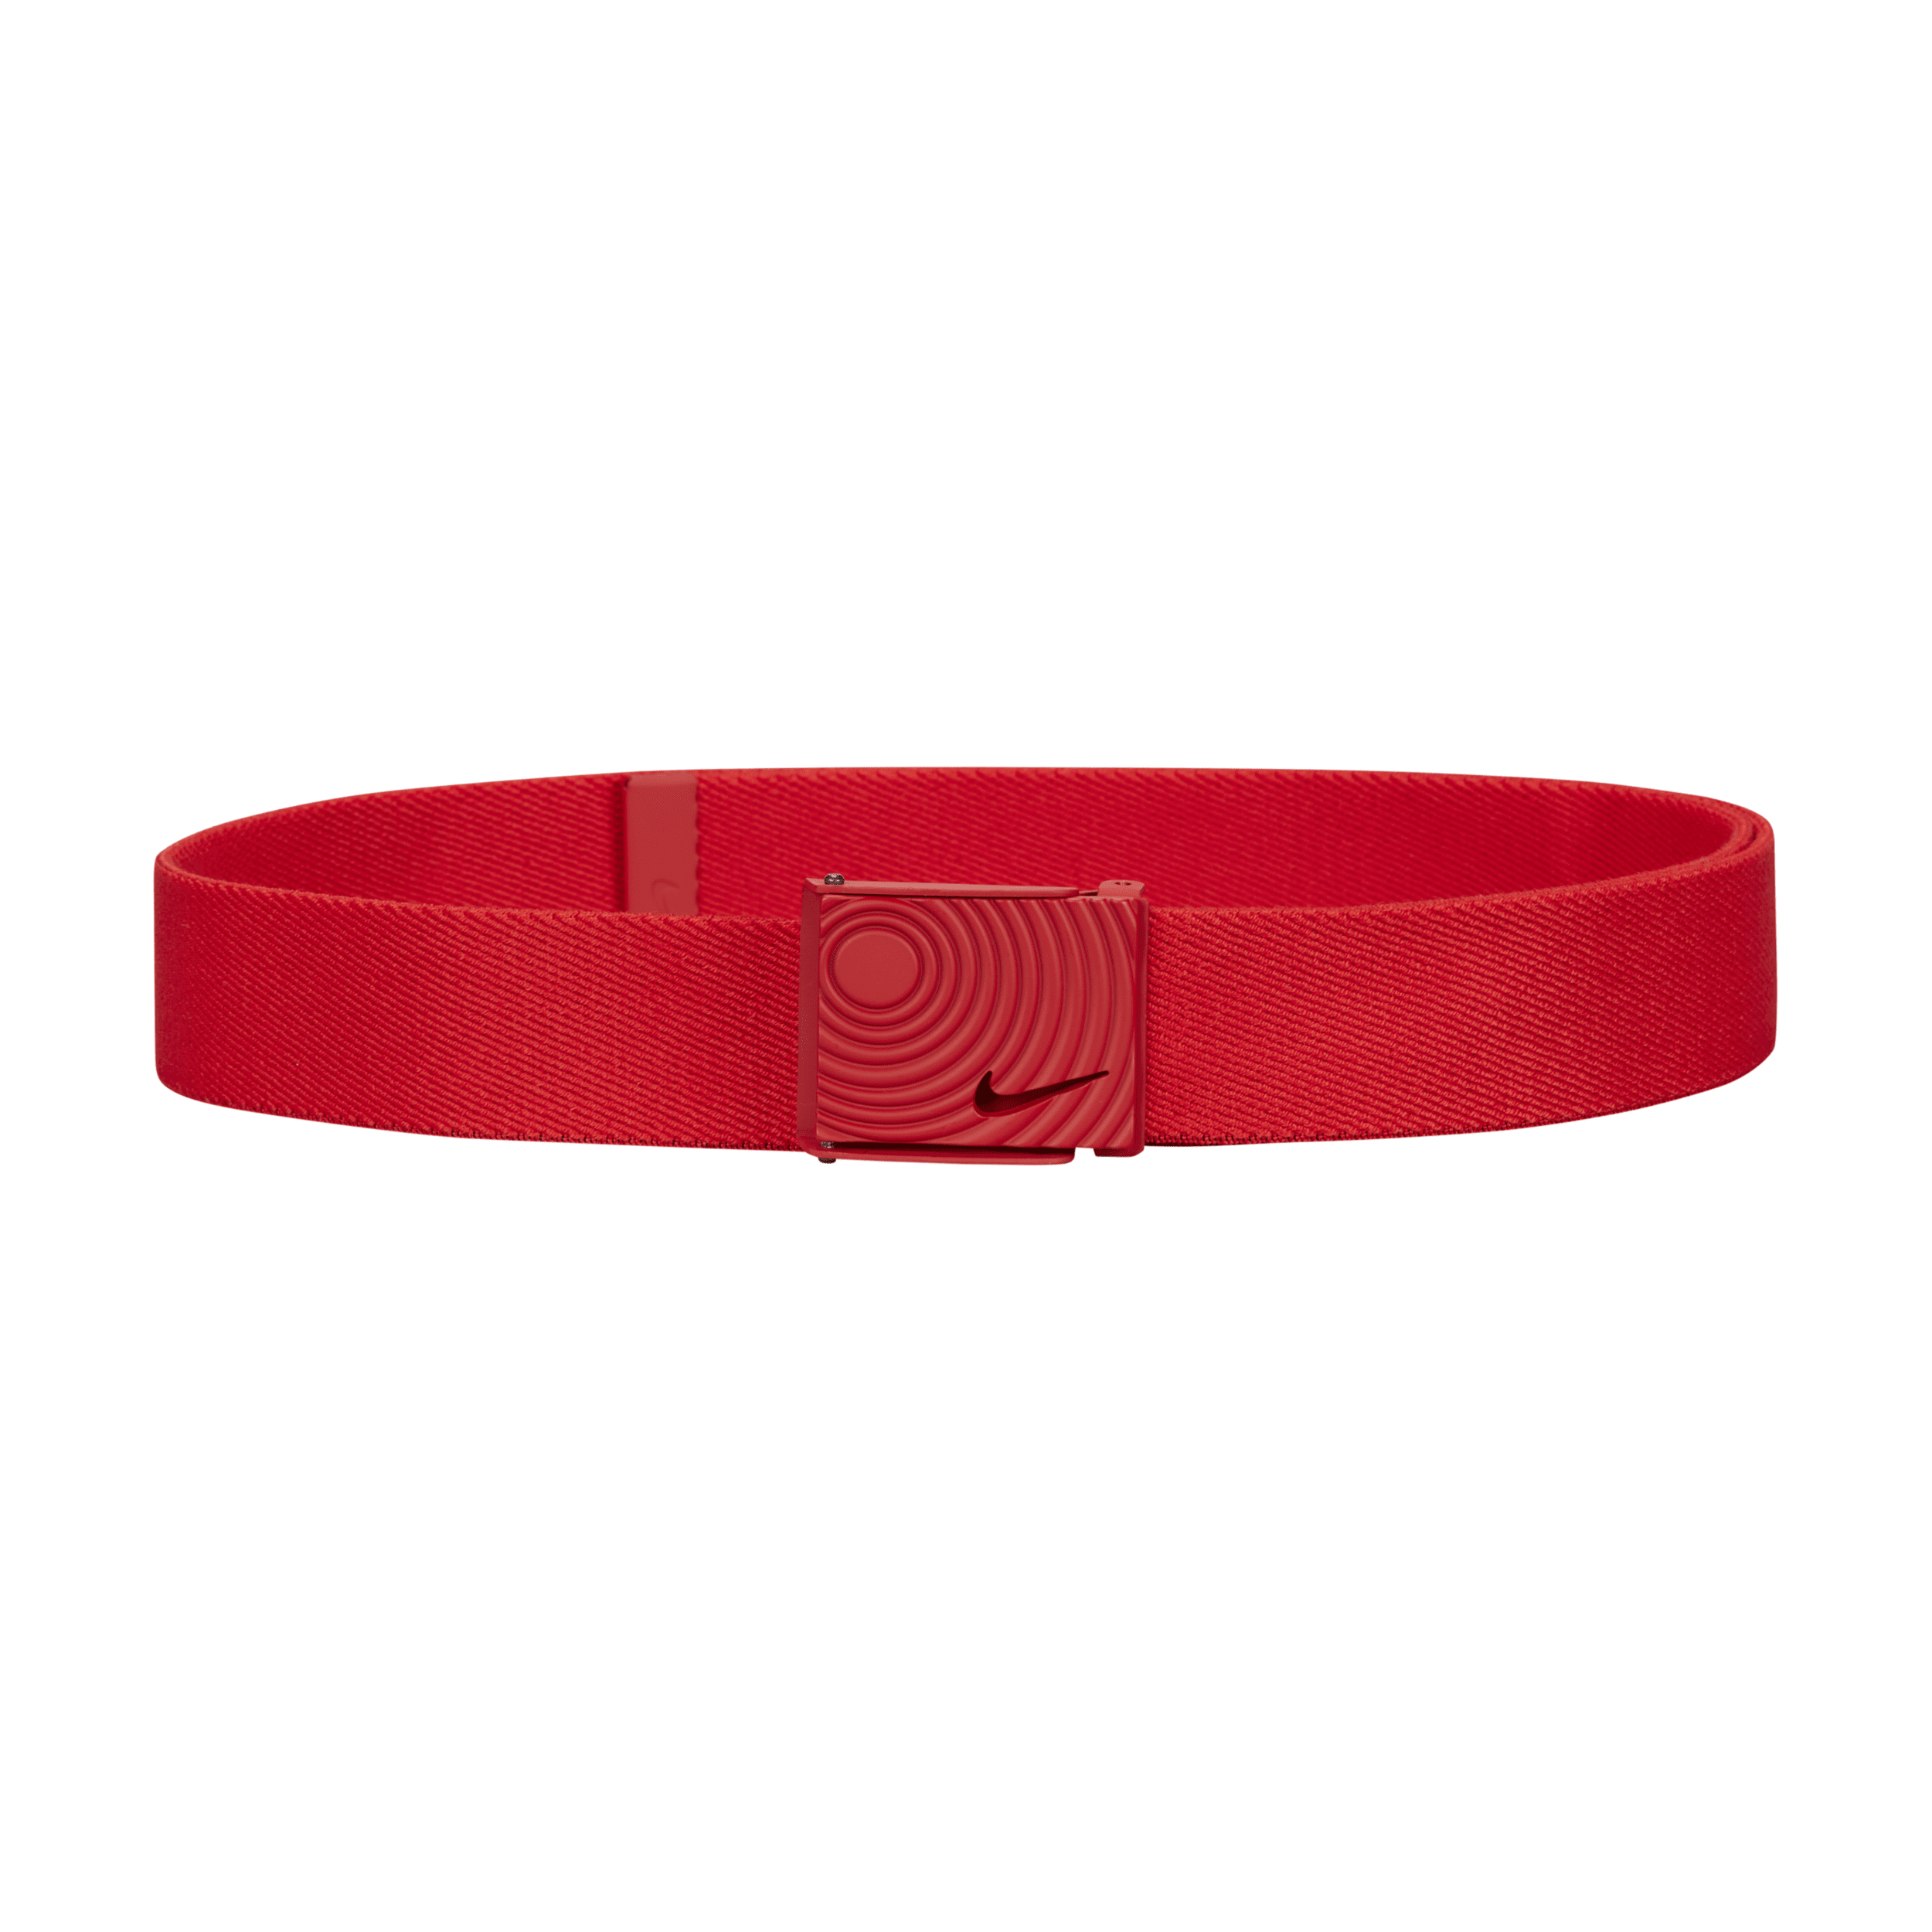 Nike Men's Outsole Stretch Web Belt In Red